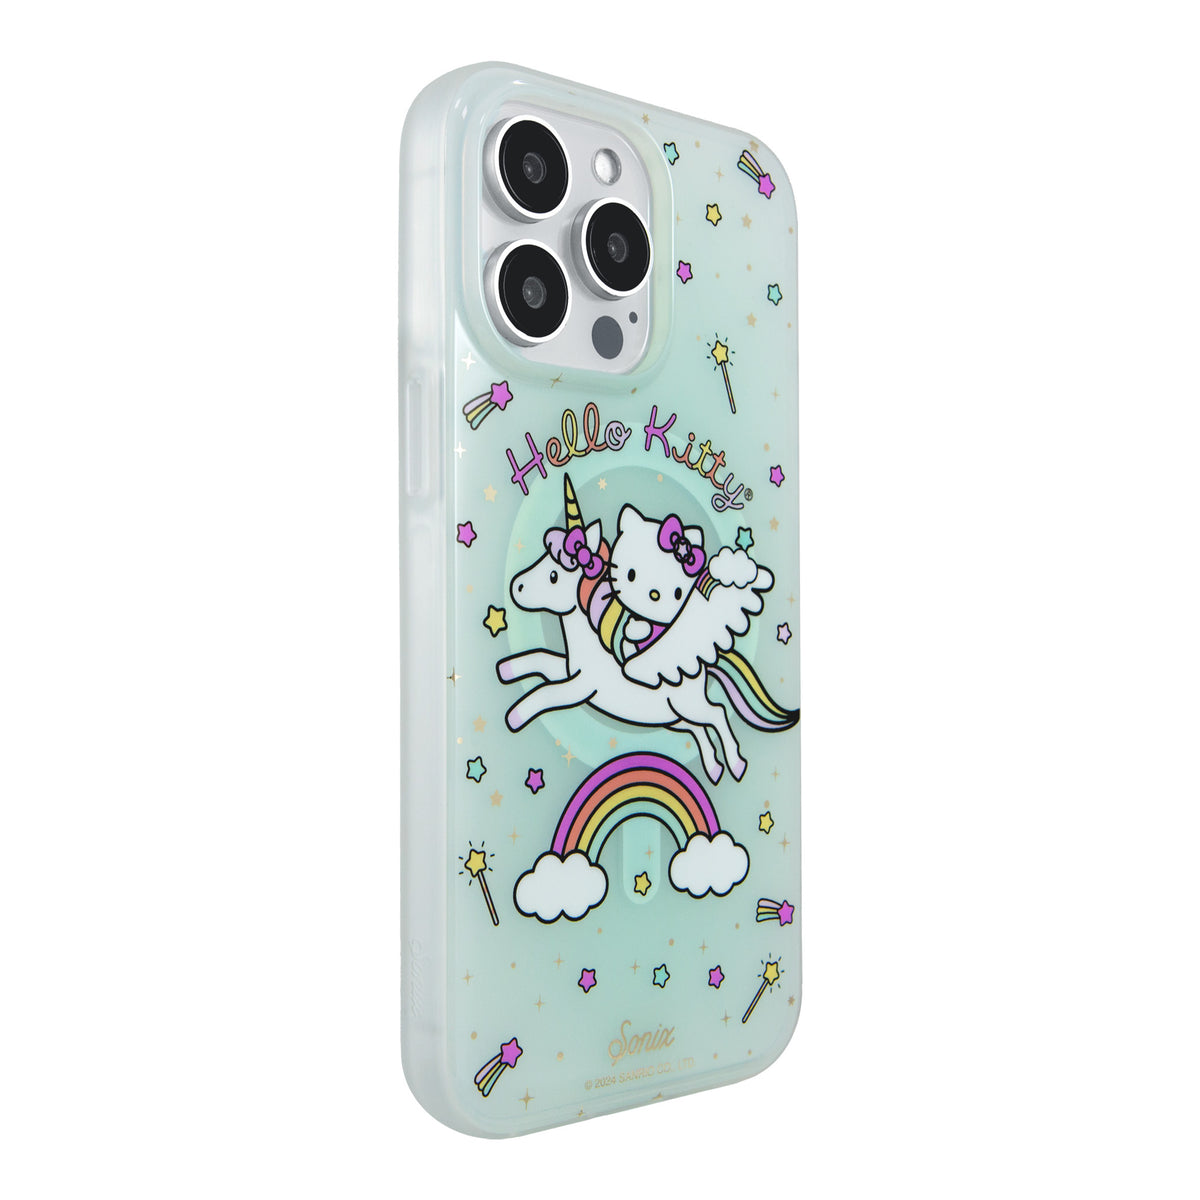 Hello Kitty x Sonix Unicorn iPhone Case Accessory BySonix Inc.   